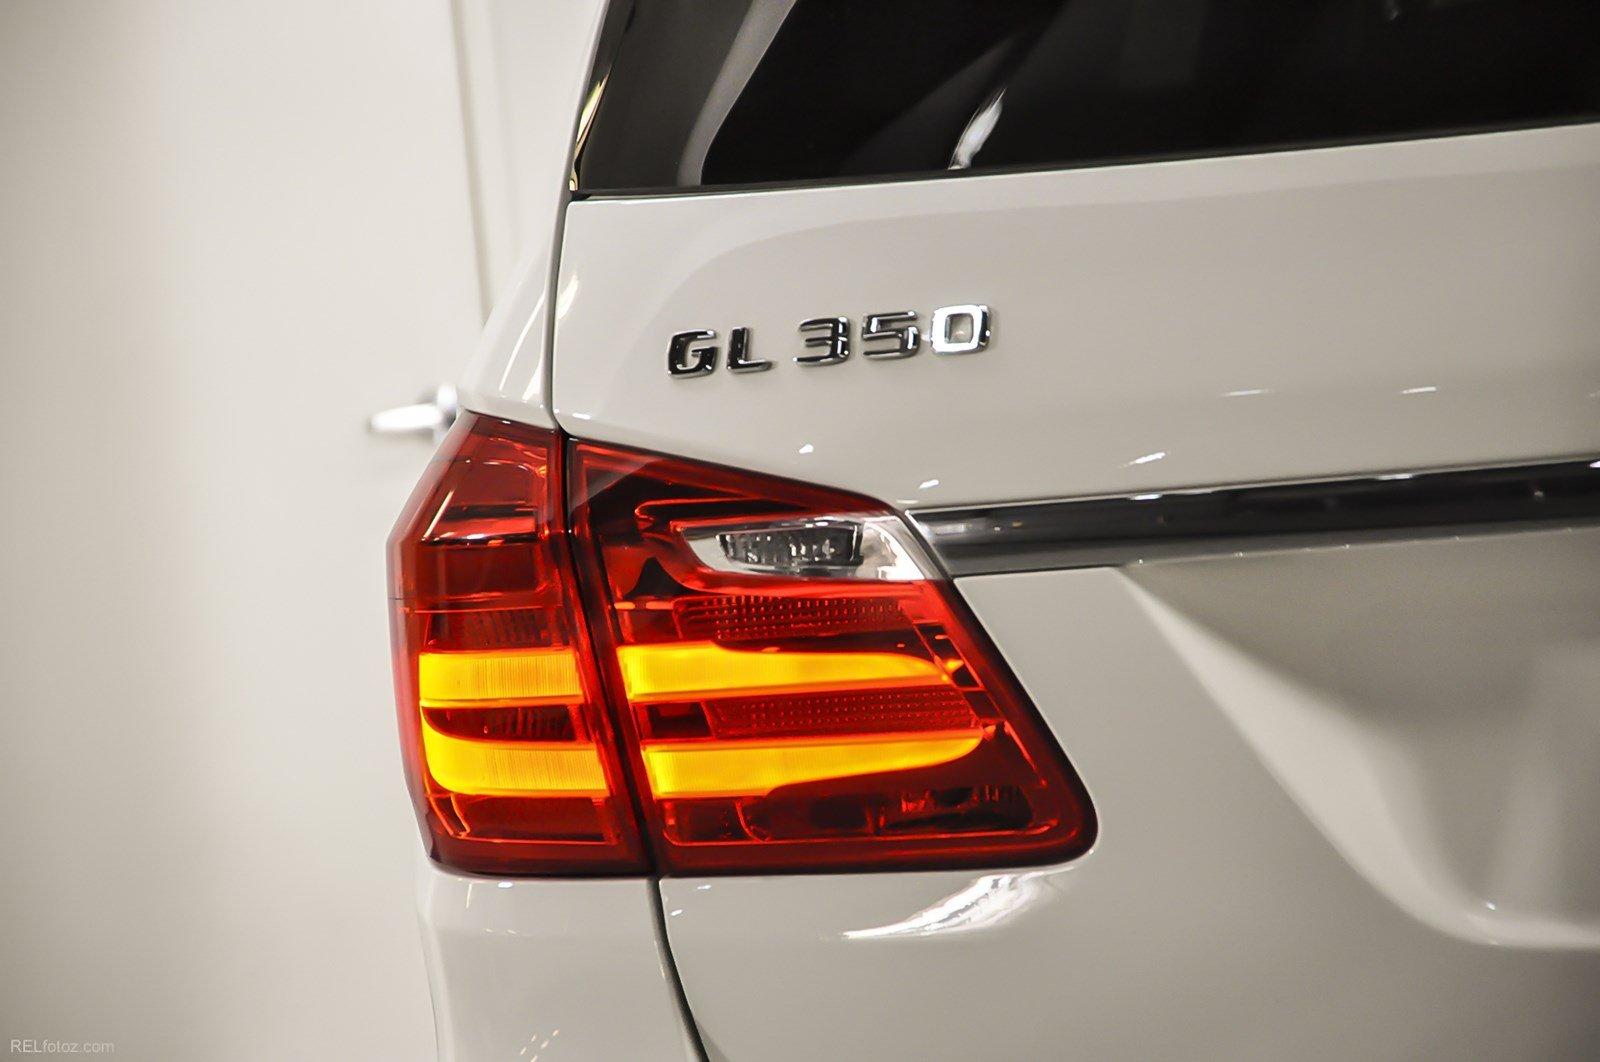 Used 2015 Mercedes-Benz GL-Class GL 350 BlueTEC for sale Sold at Gravity Autos Marietta in Marietta GA 30060 6